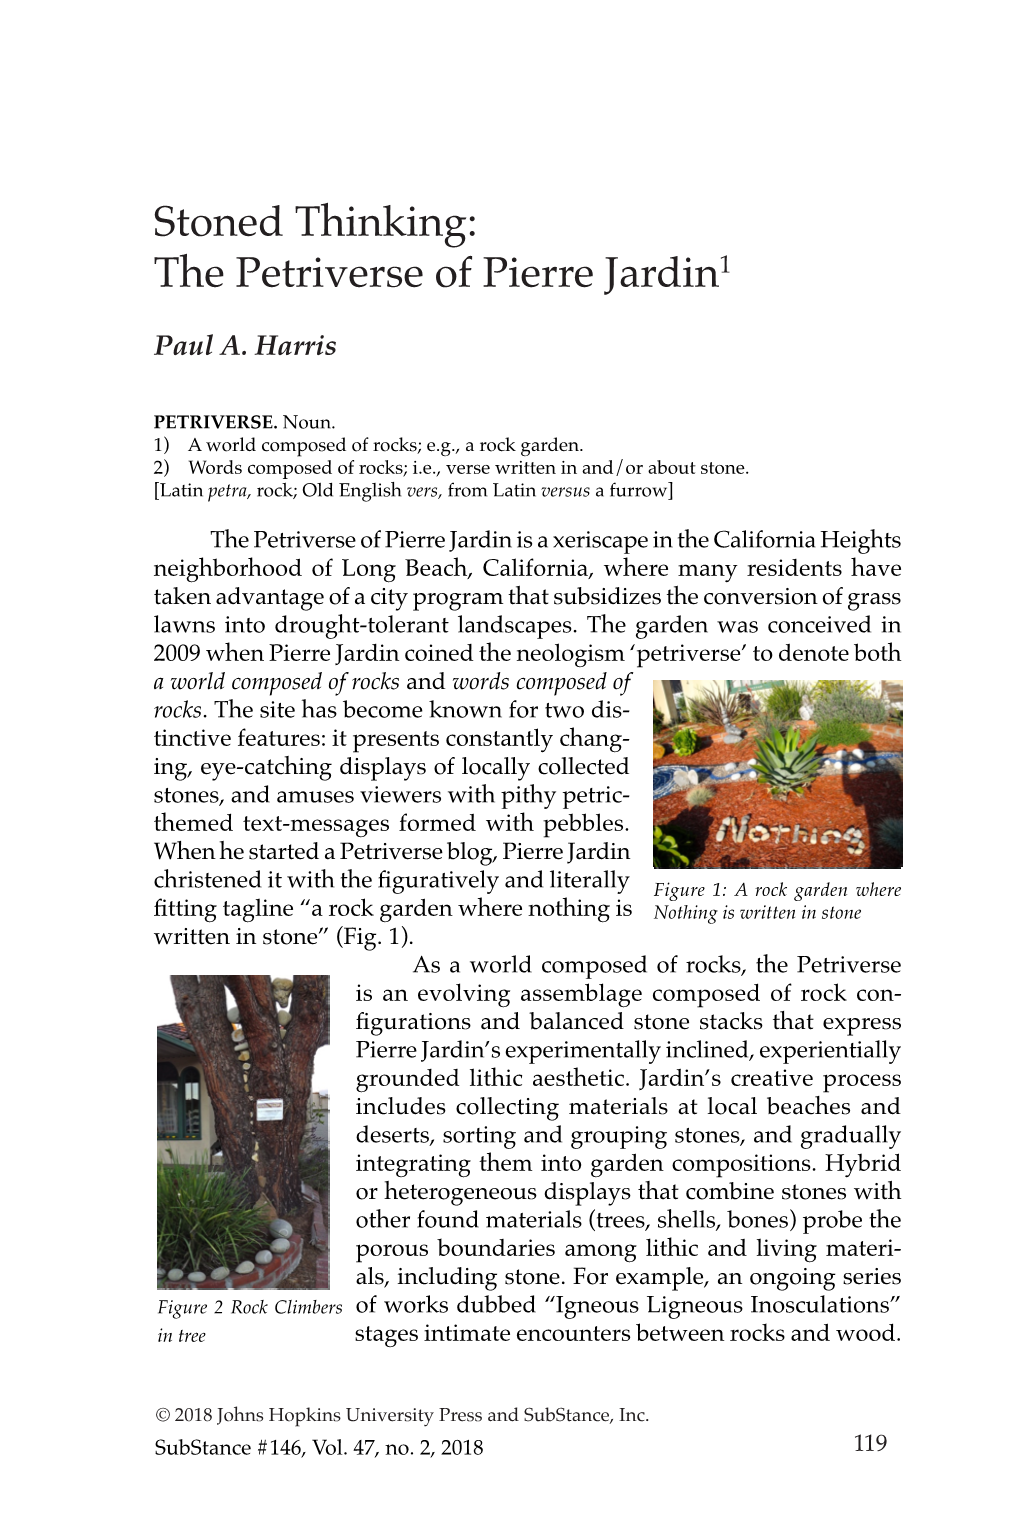 Stoned Thinking: the Petriverse of Pierre Jardin1